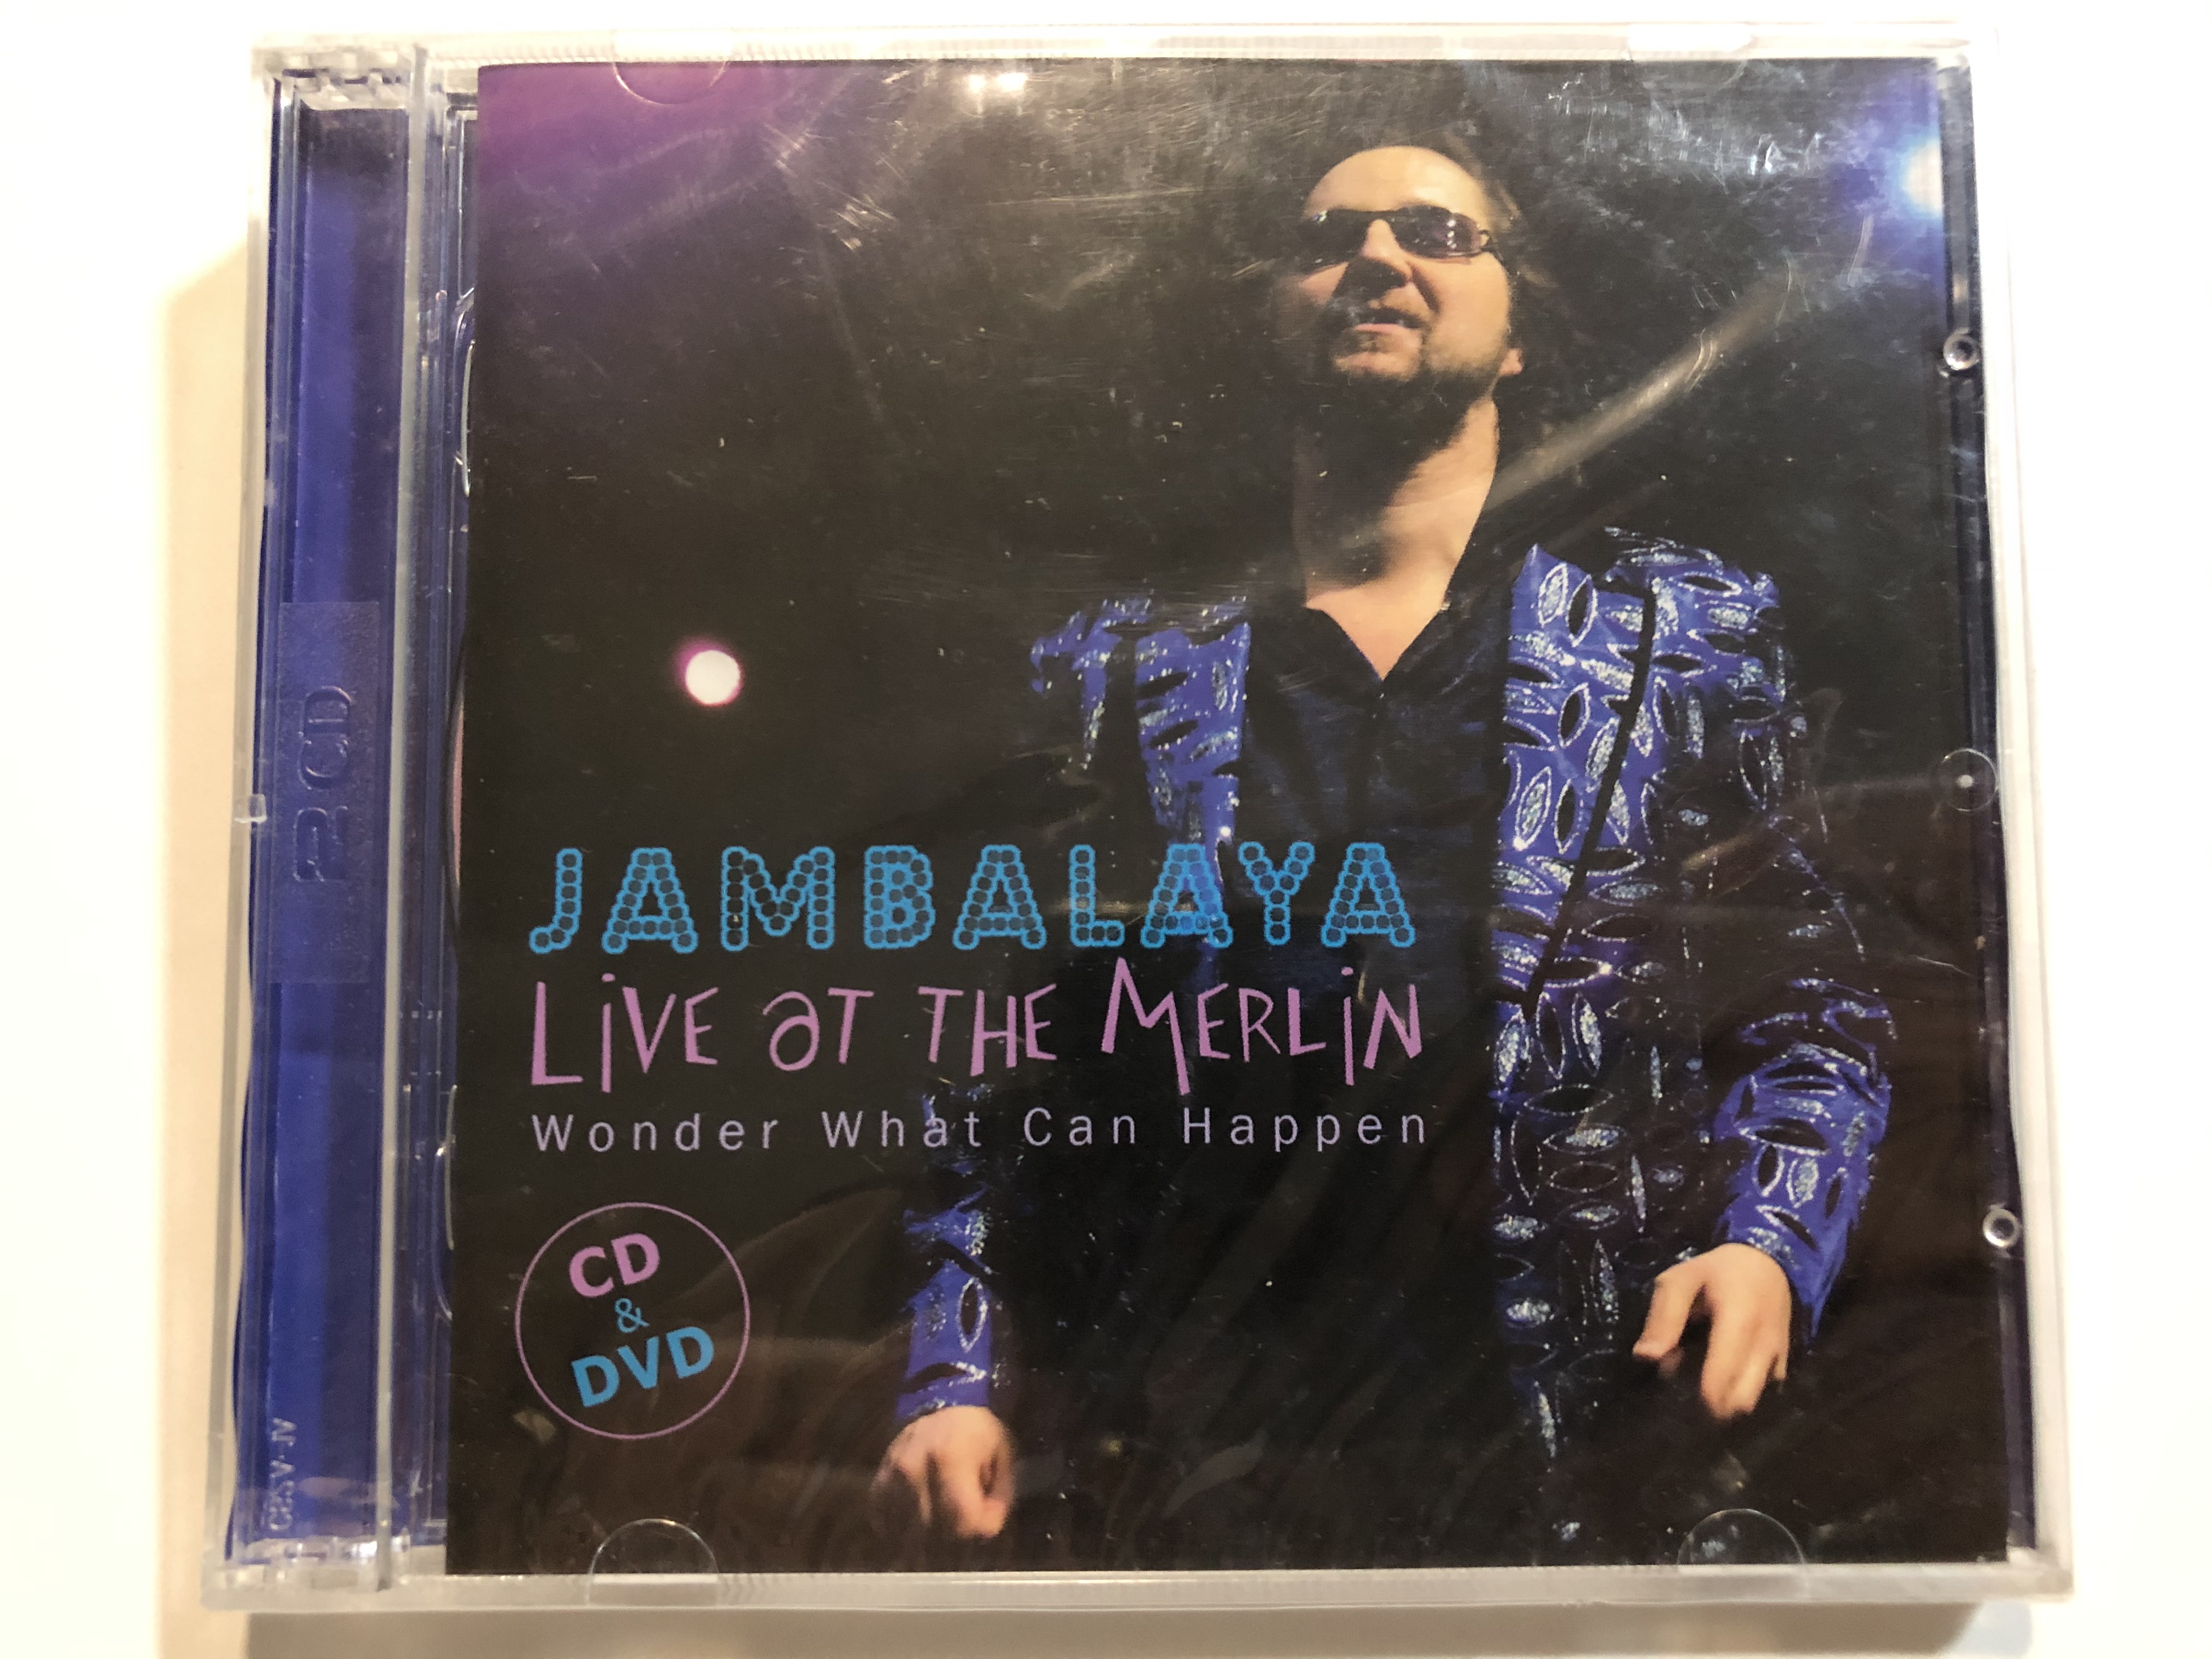 jambalaya-live-at-the-merlin-wonder-what-can-happen-narrator-records-audio-cd-dvd-cd-2008-nrr060-1-.jpg